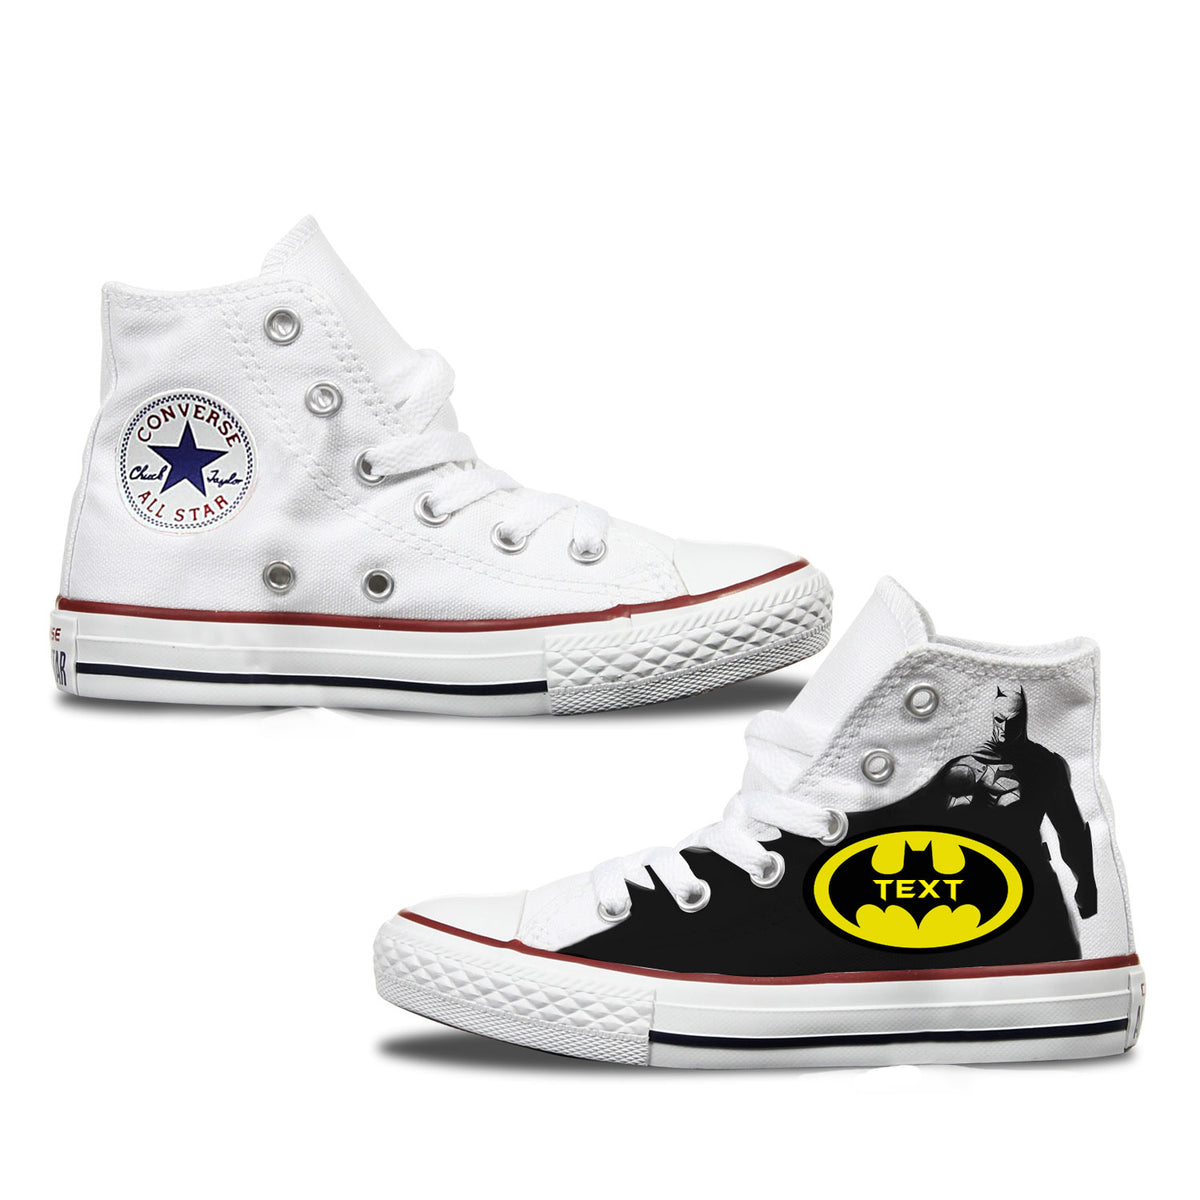 Batman Kids Custom Converse